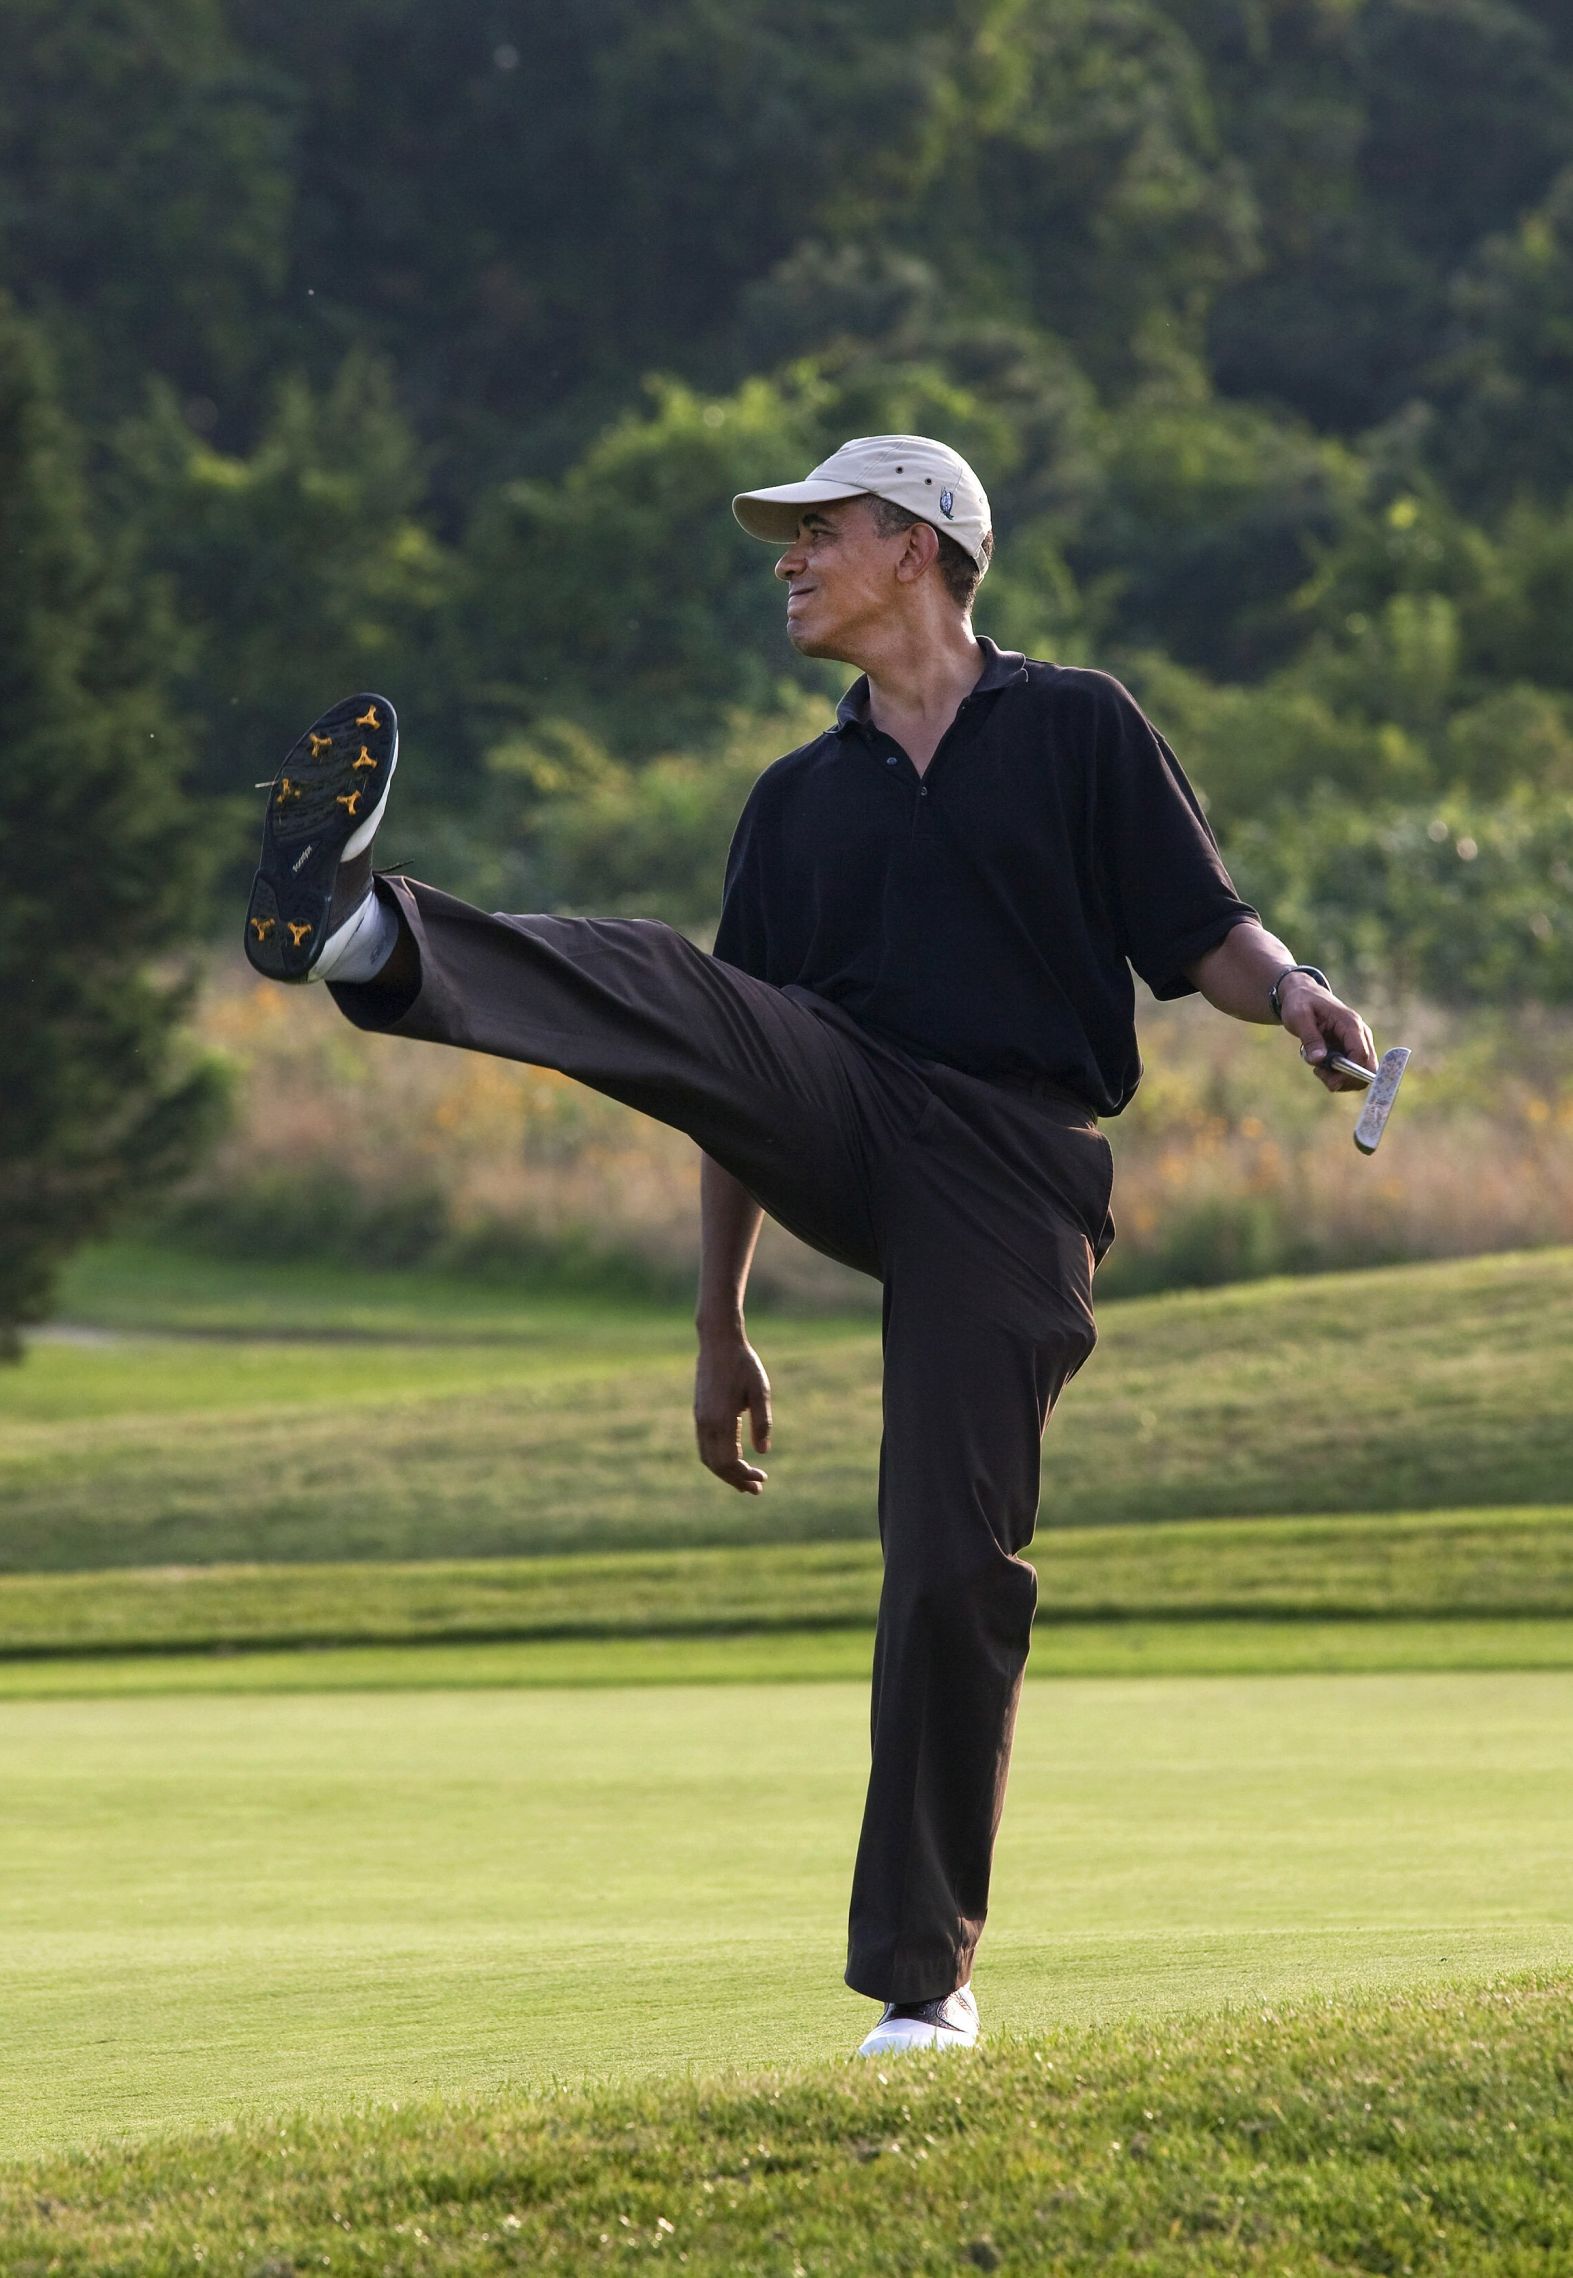 Obama hind leg Blank Meme Template